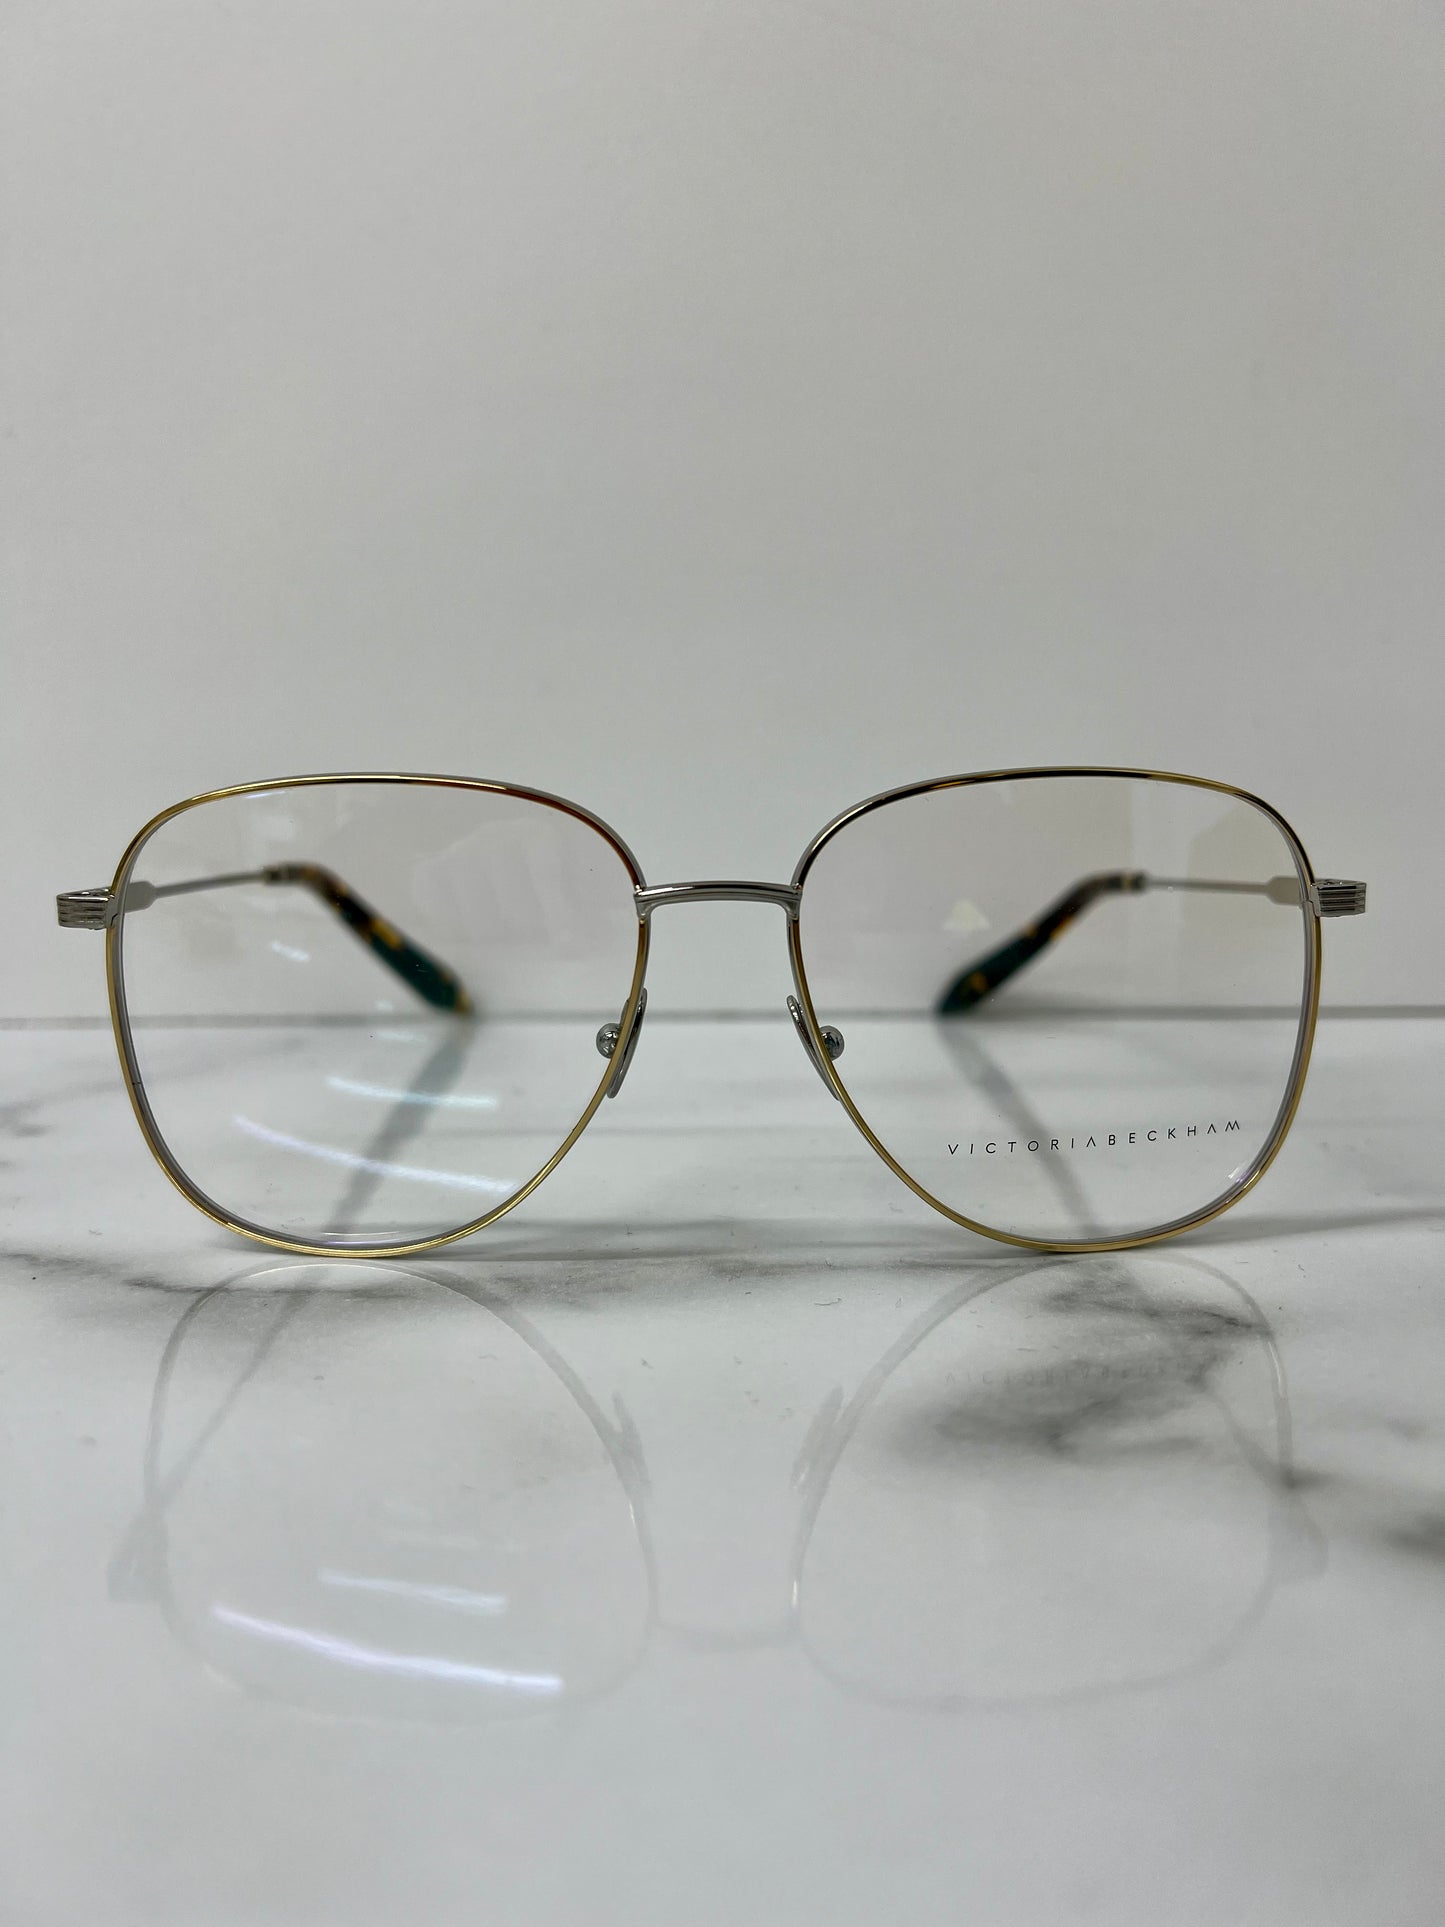 Victoria Beckham Glasses Frames Optical Women Silver Metal Eyeglasses VBOPT219